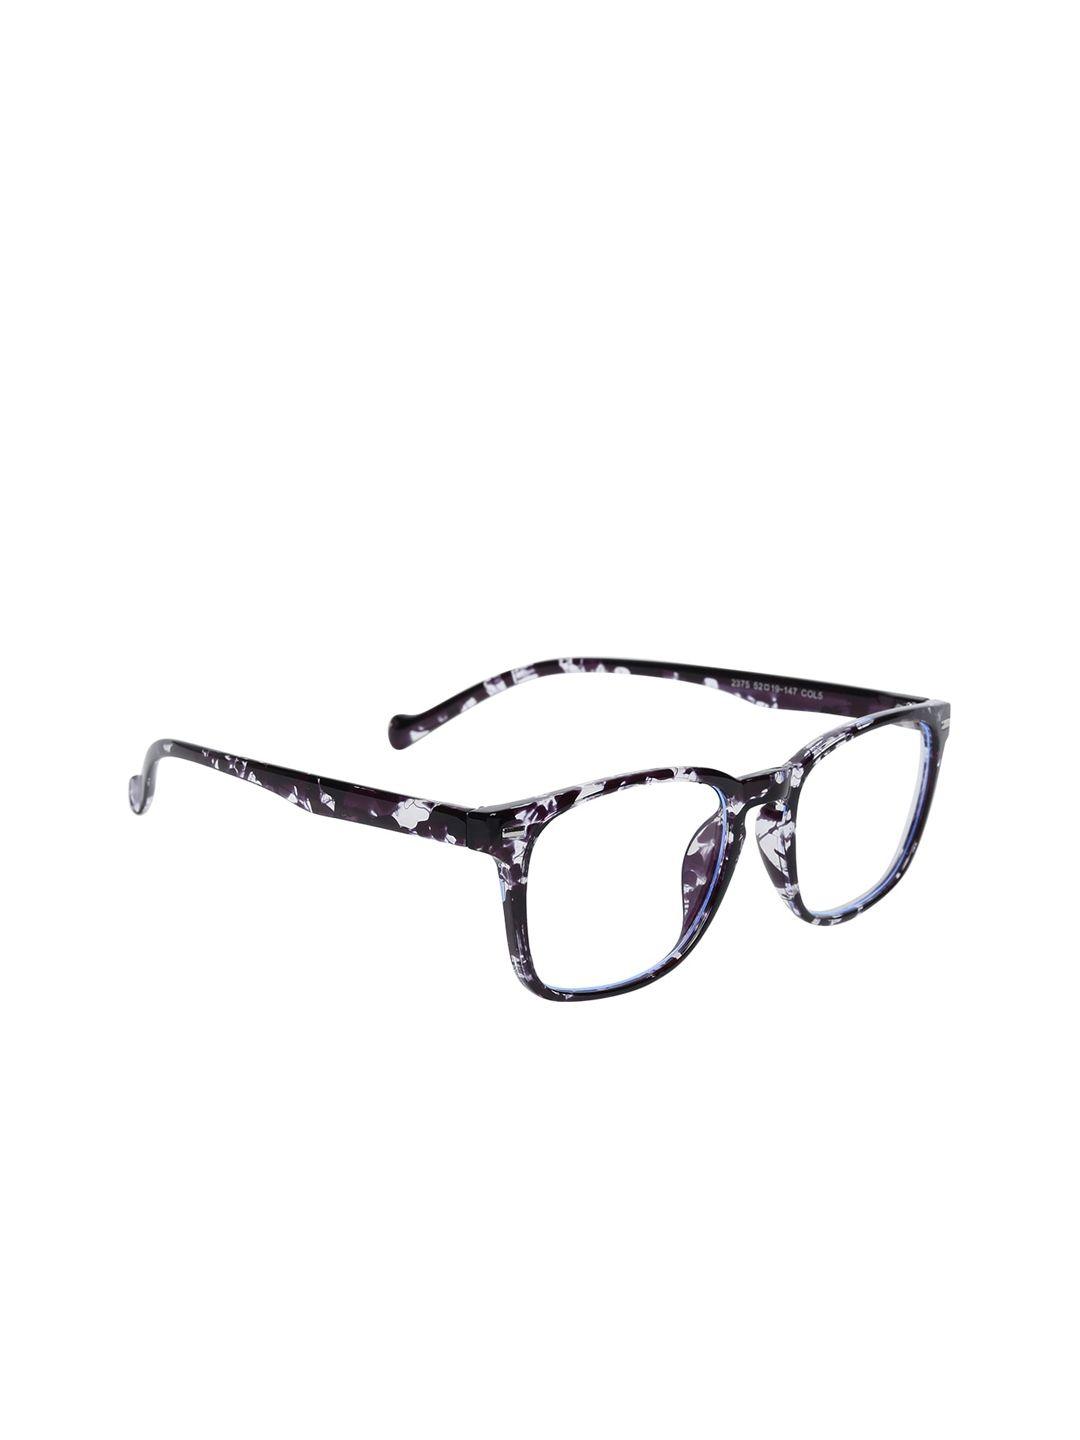 peter jones eyewear unisex grey & black abstract full rim square frames ag2375gda